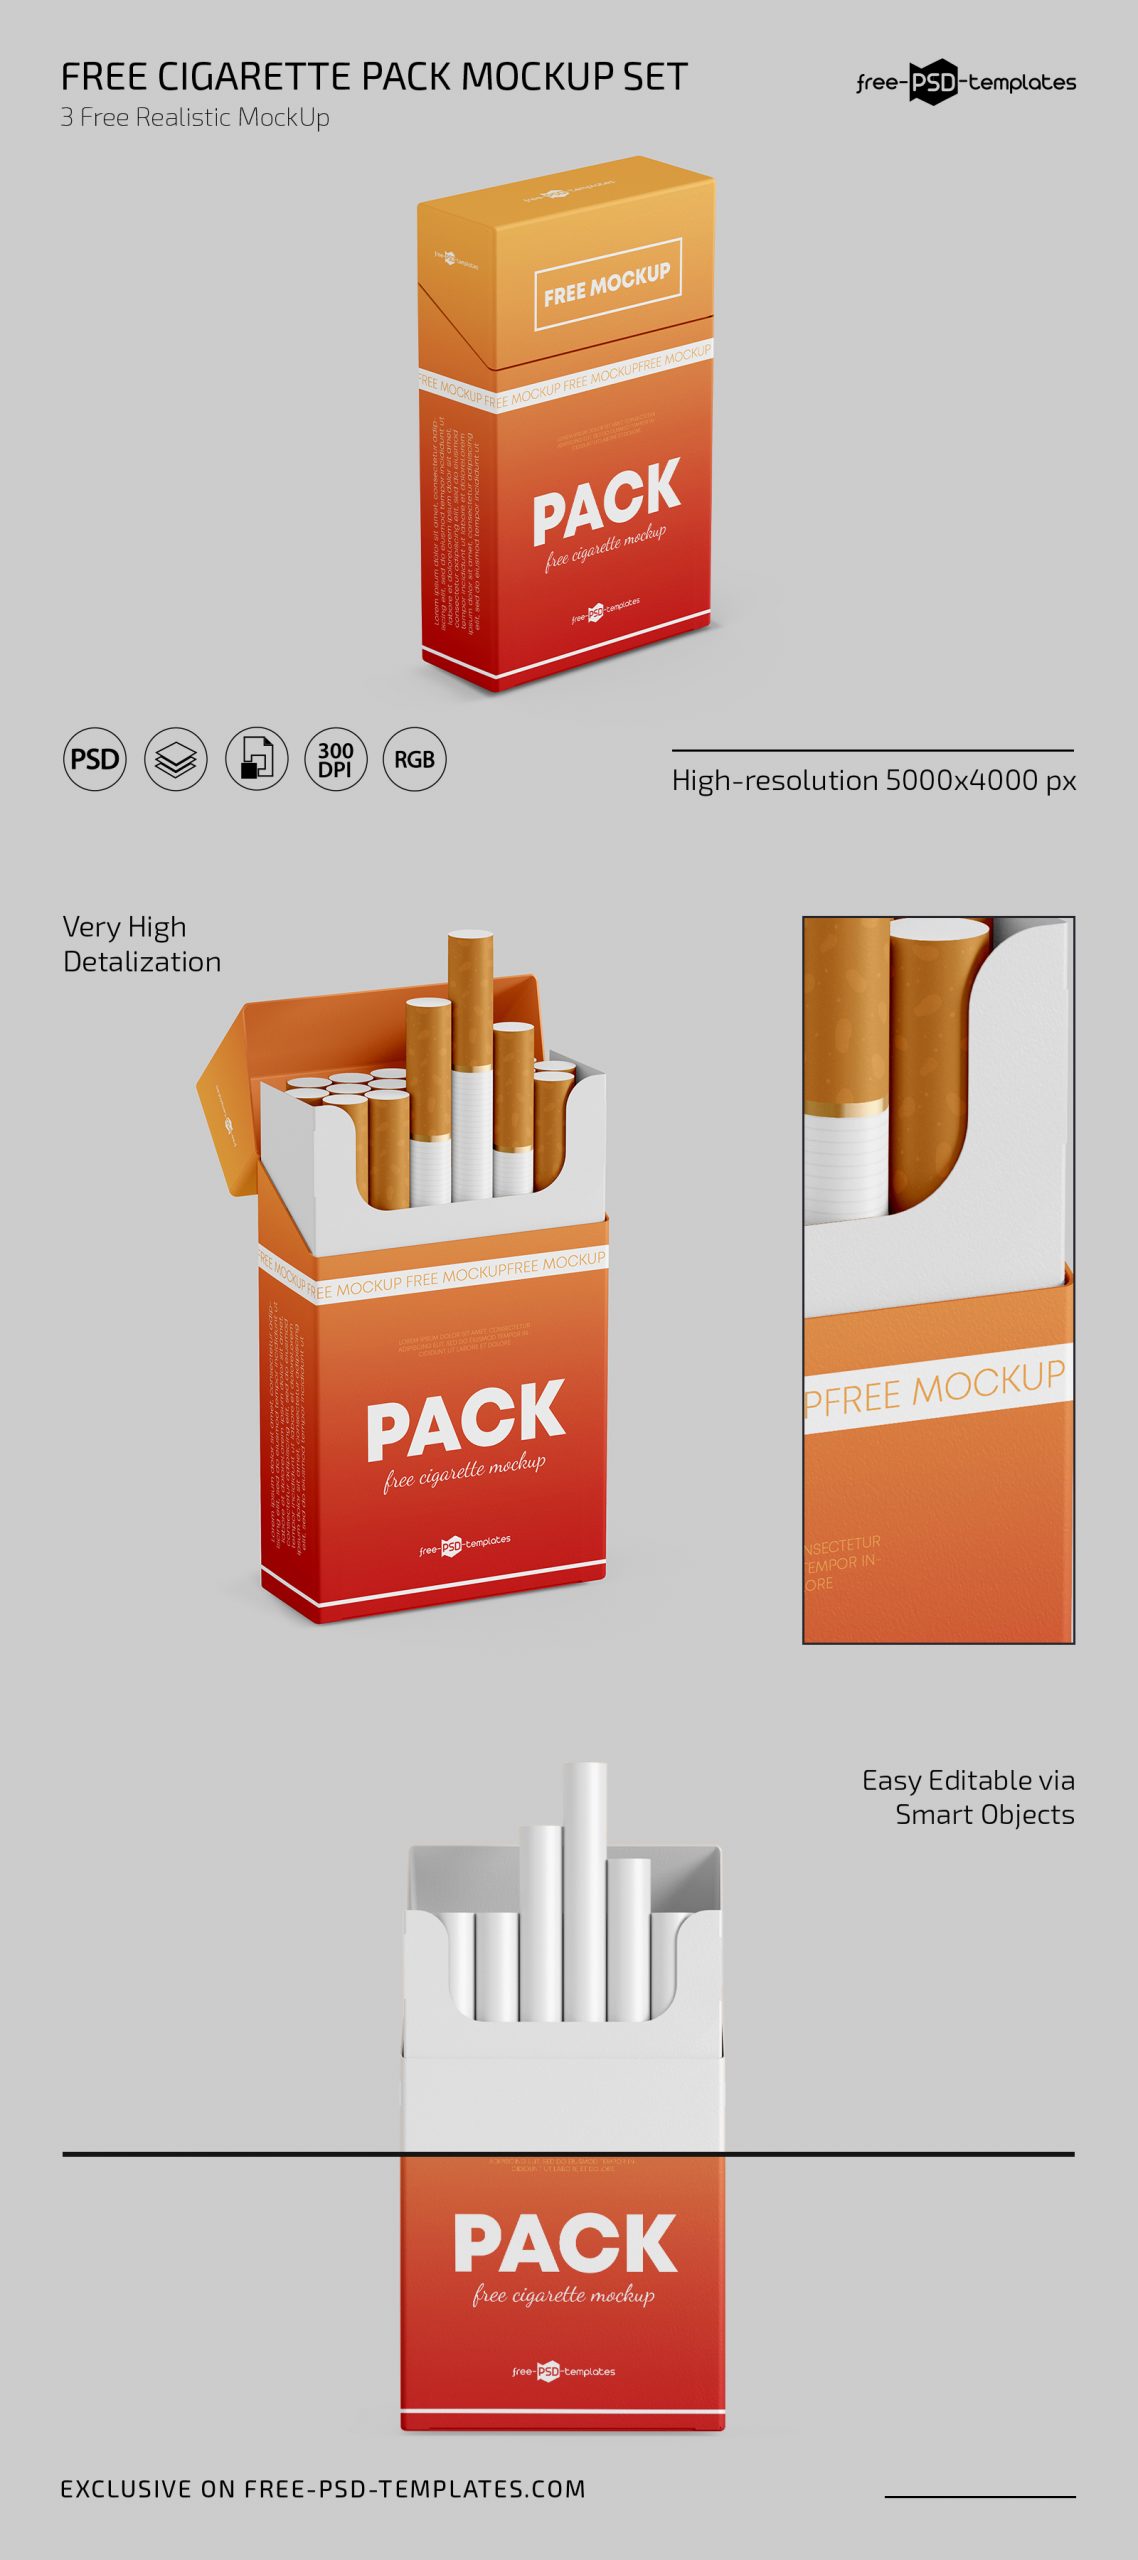 Free Cigarette Pack Mockup Set Free PSD Templates